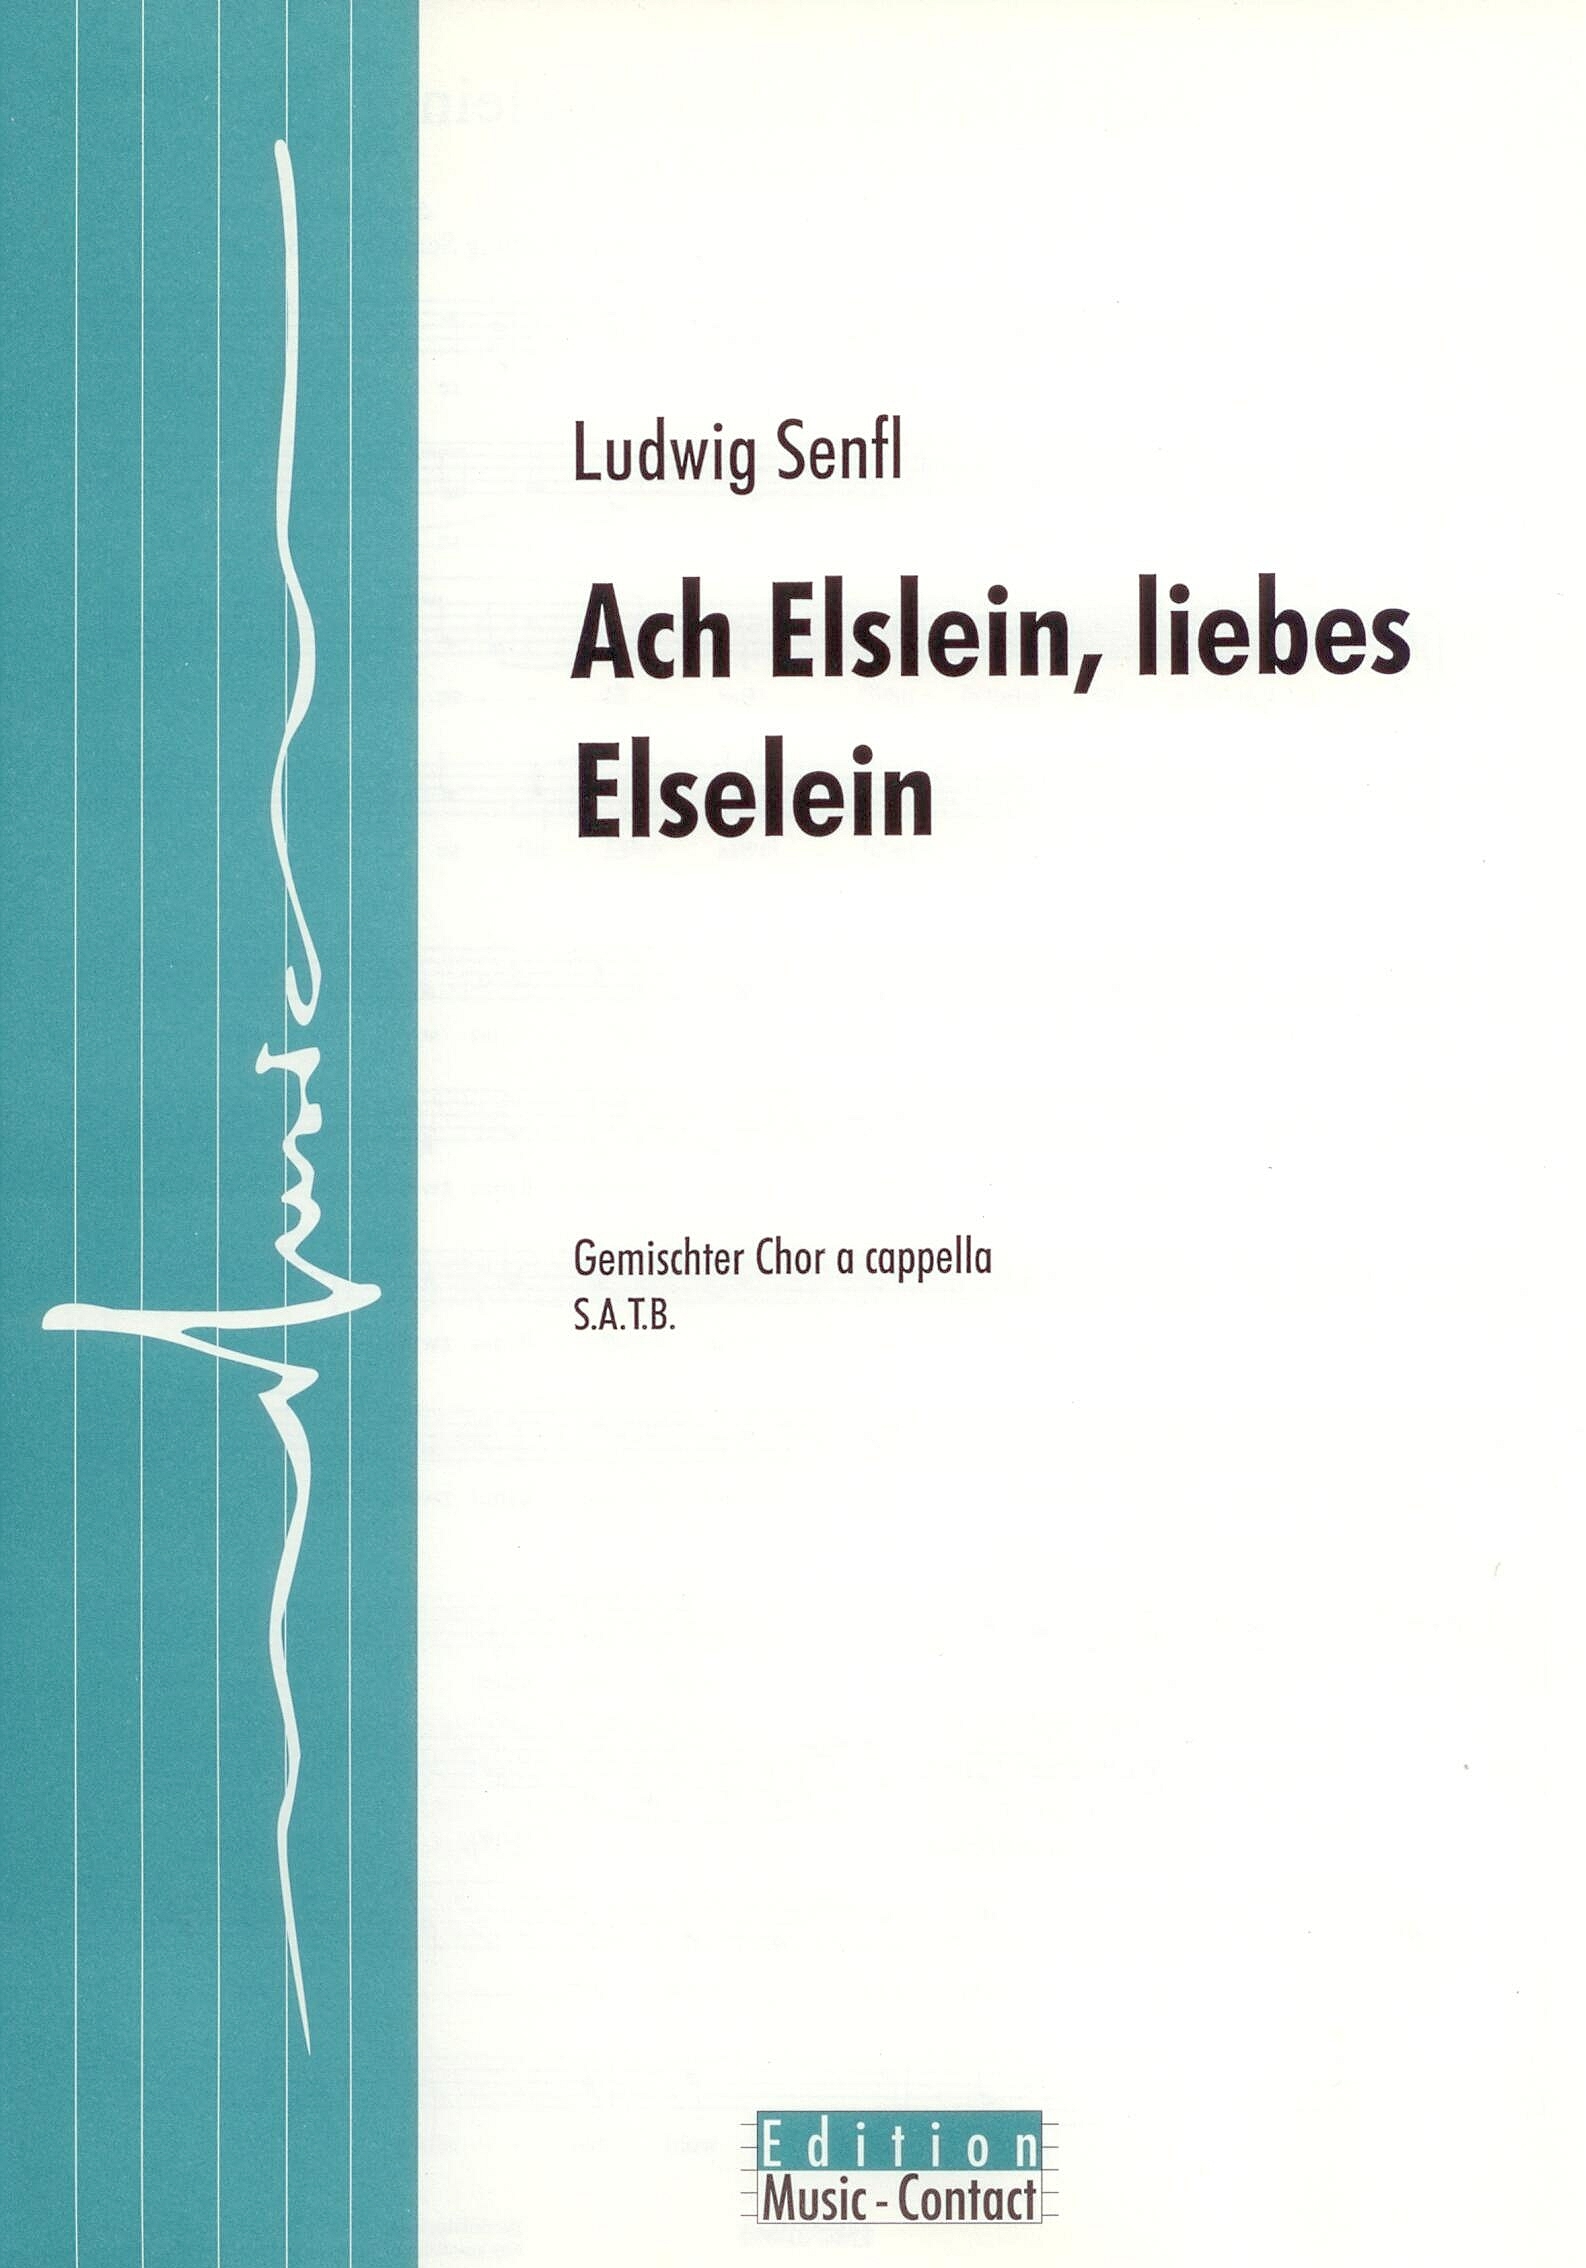 Ach Elslein, liebes Elselein - Show sample score